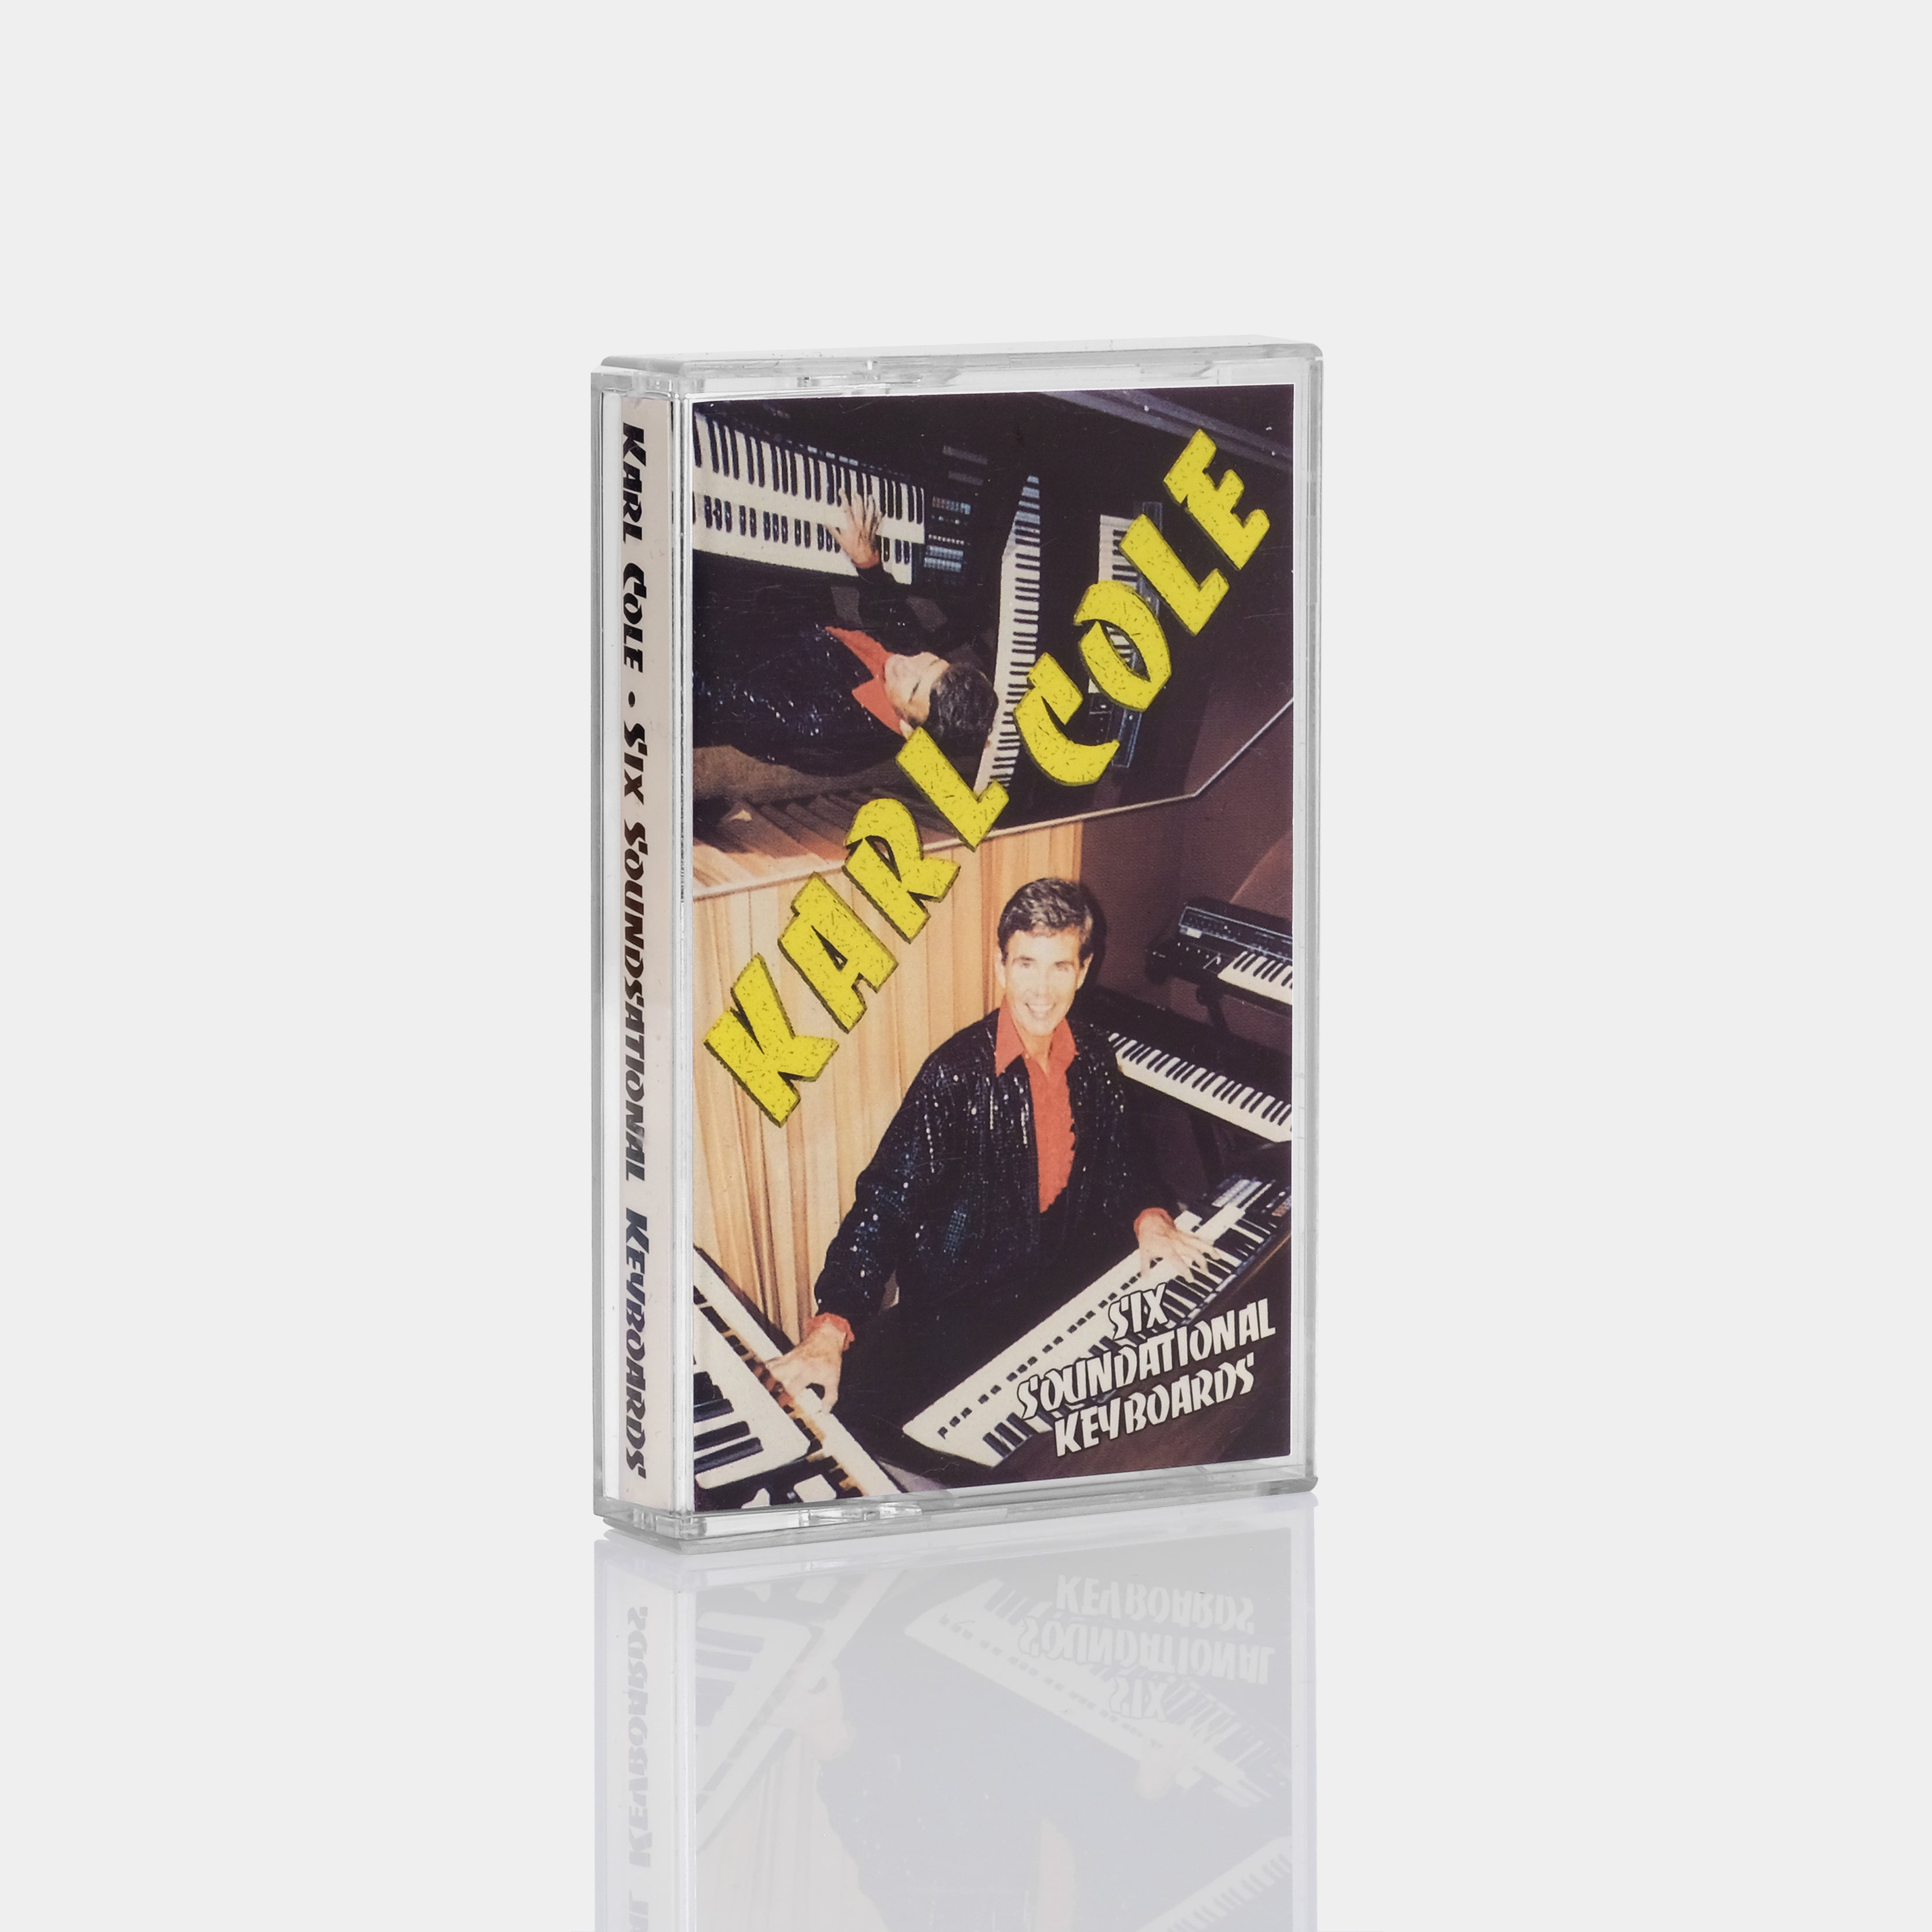 Karl Cole - Six Soundational Keyboards Cassette Tape